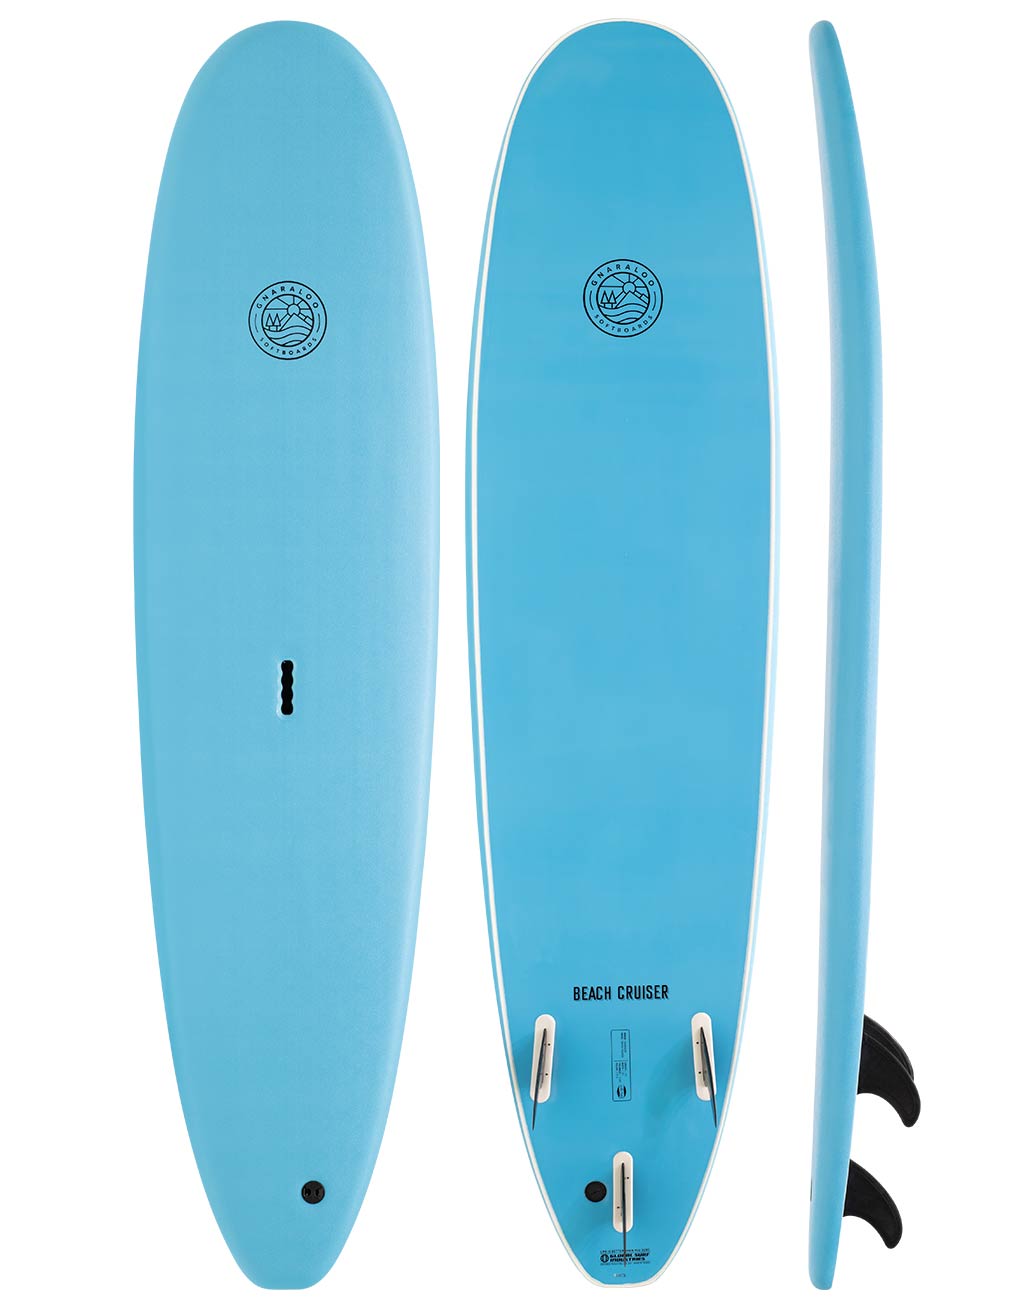 Gnaraloo soft surfboards - beach cruiser blue surfboard